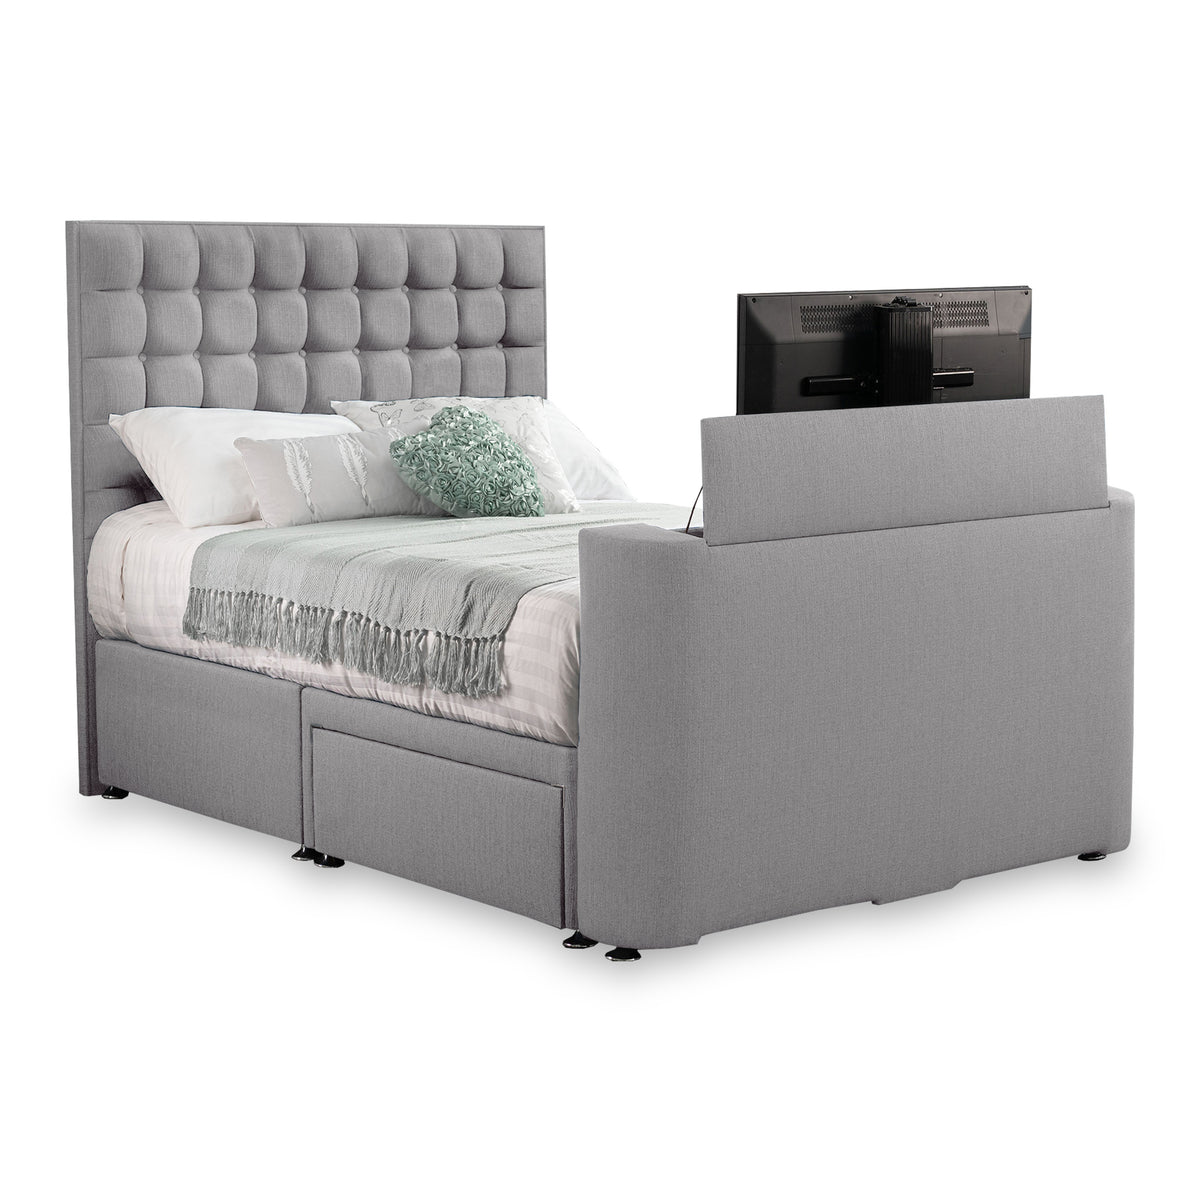 Bridgeford Linen 2 Drawer TV Bed from Roseland Furniture